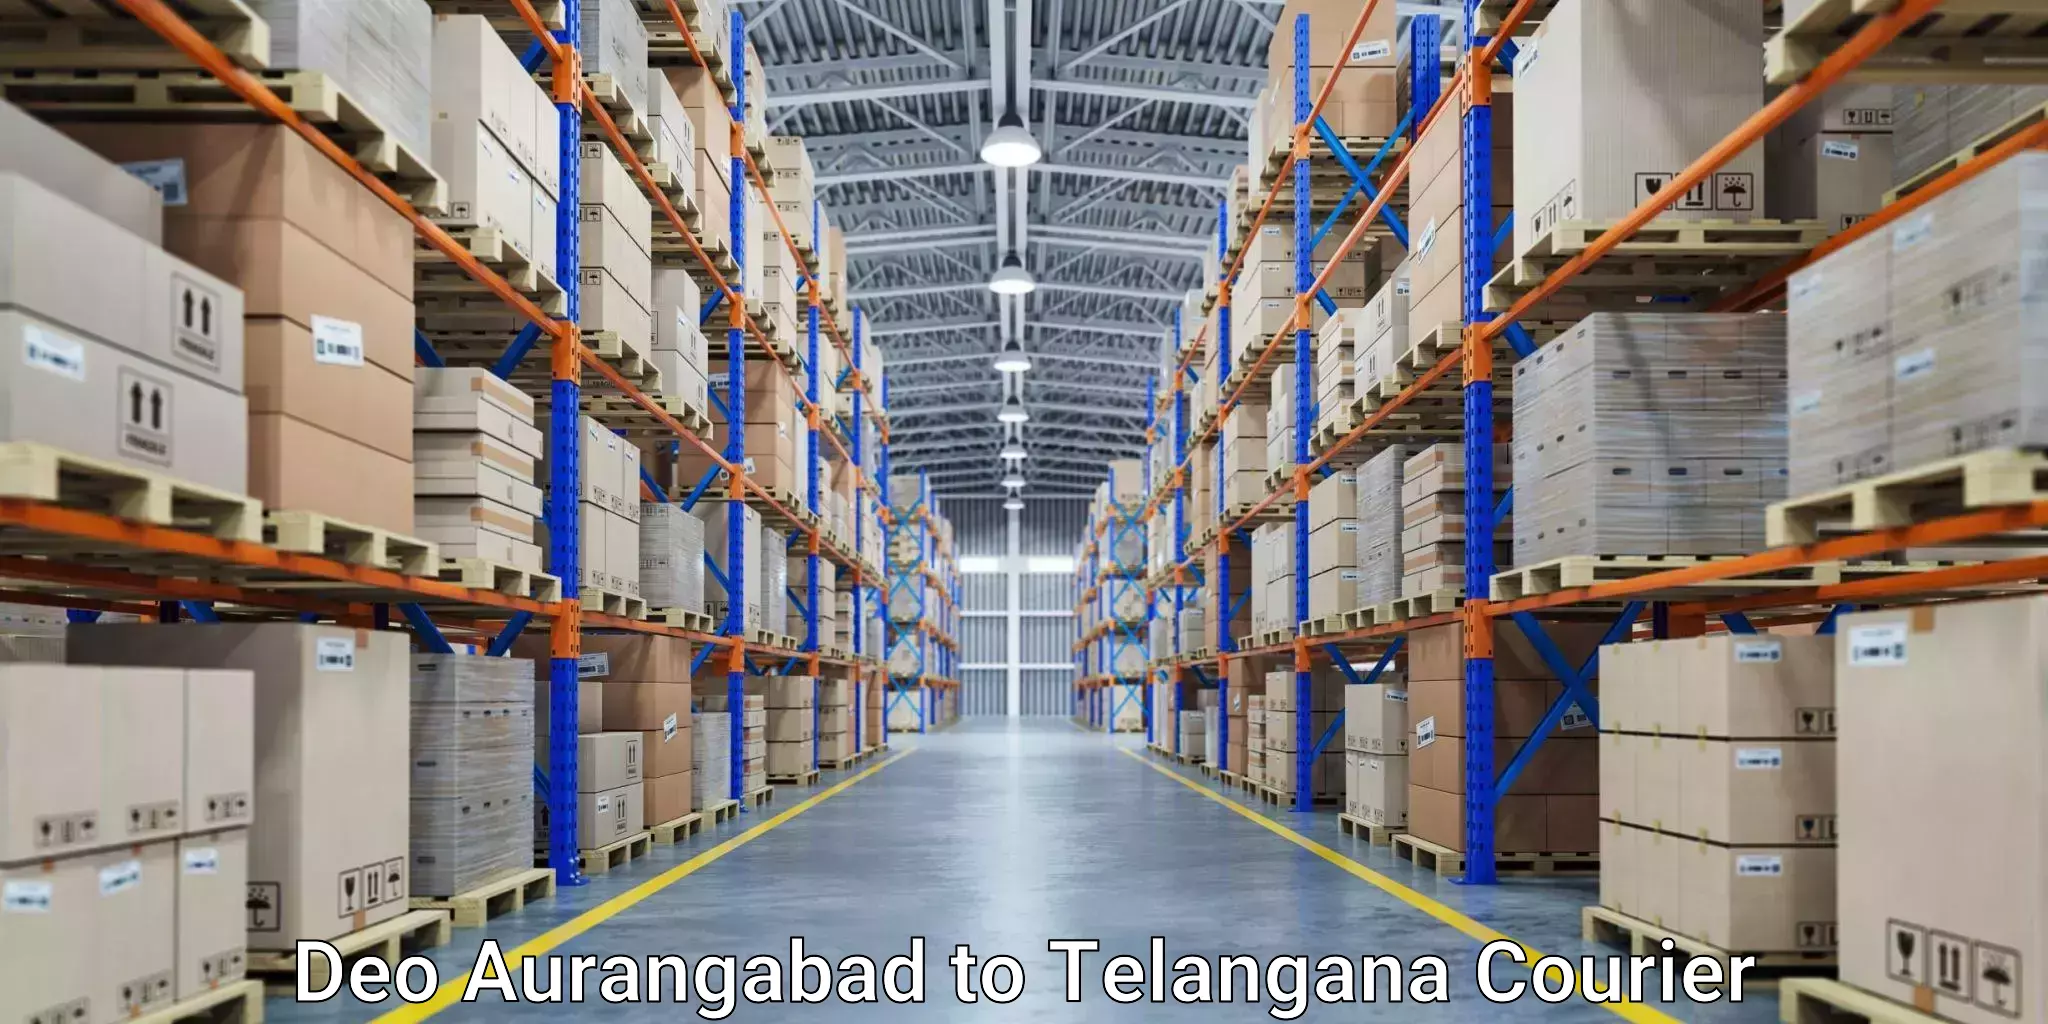 Comprehensive delivery network Deo Aurangabad to Yellareddy